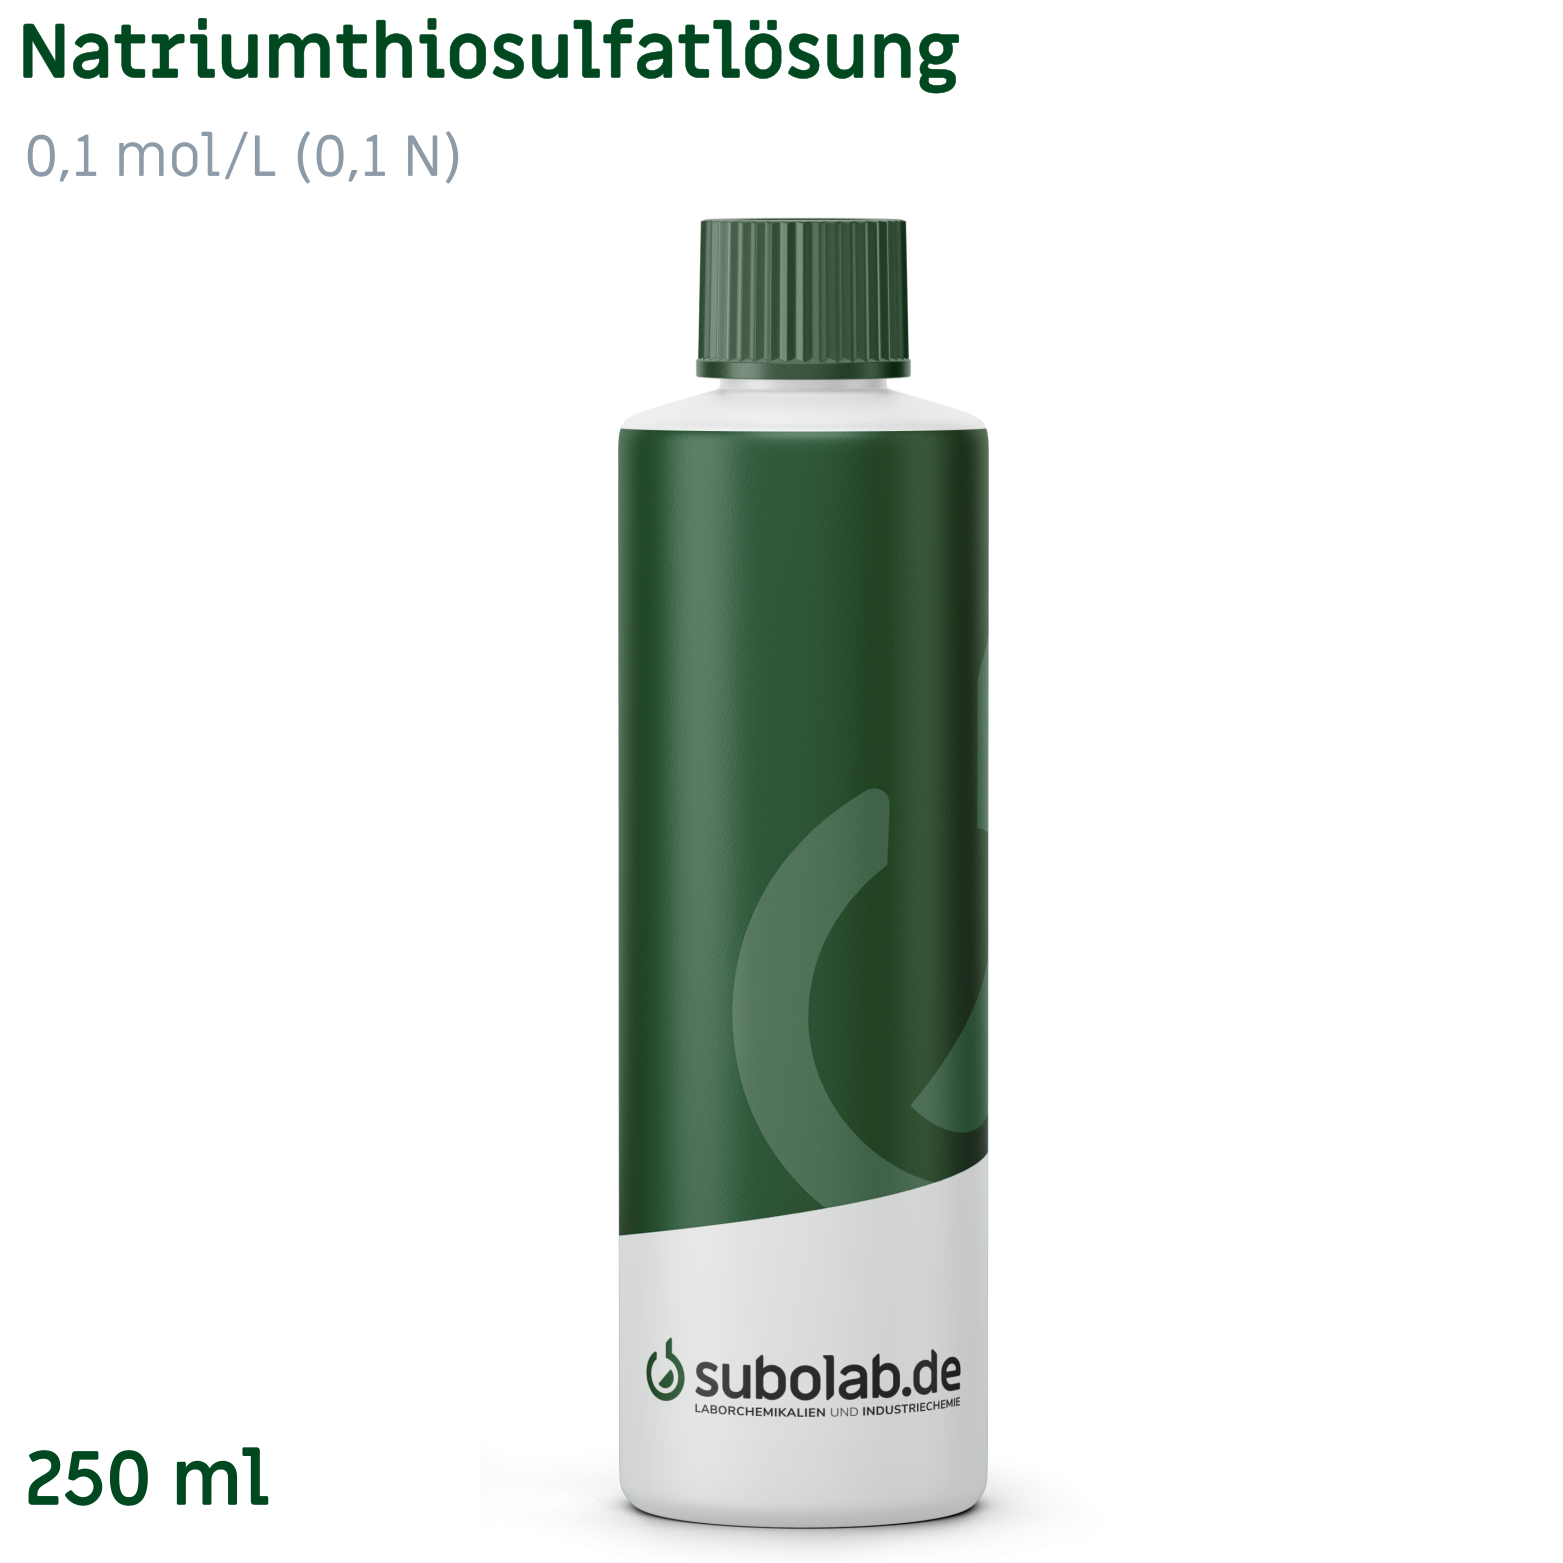 Bild von Natriumthiosulfatlösung 0,1 mol/L (0,1 N) (250 ml)